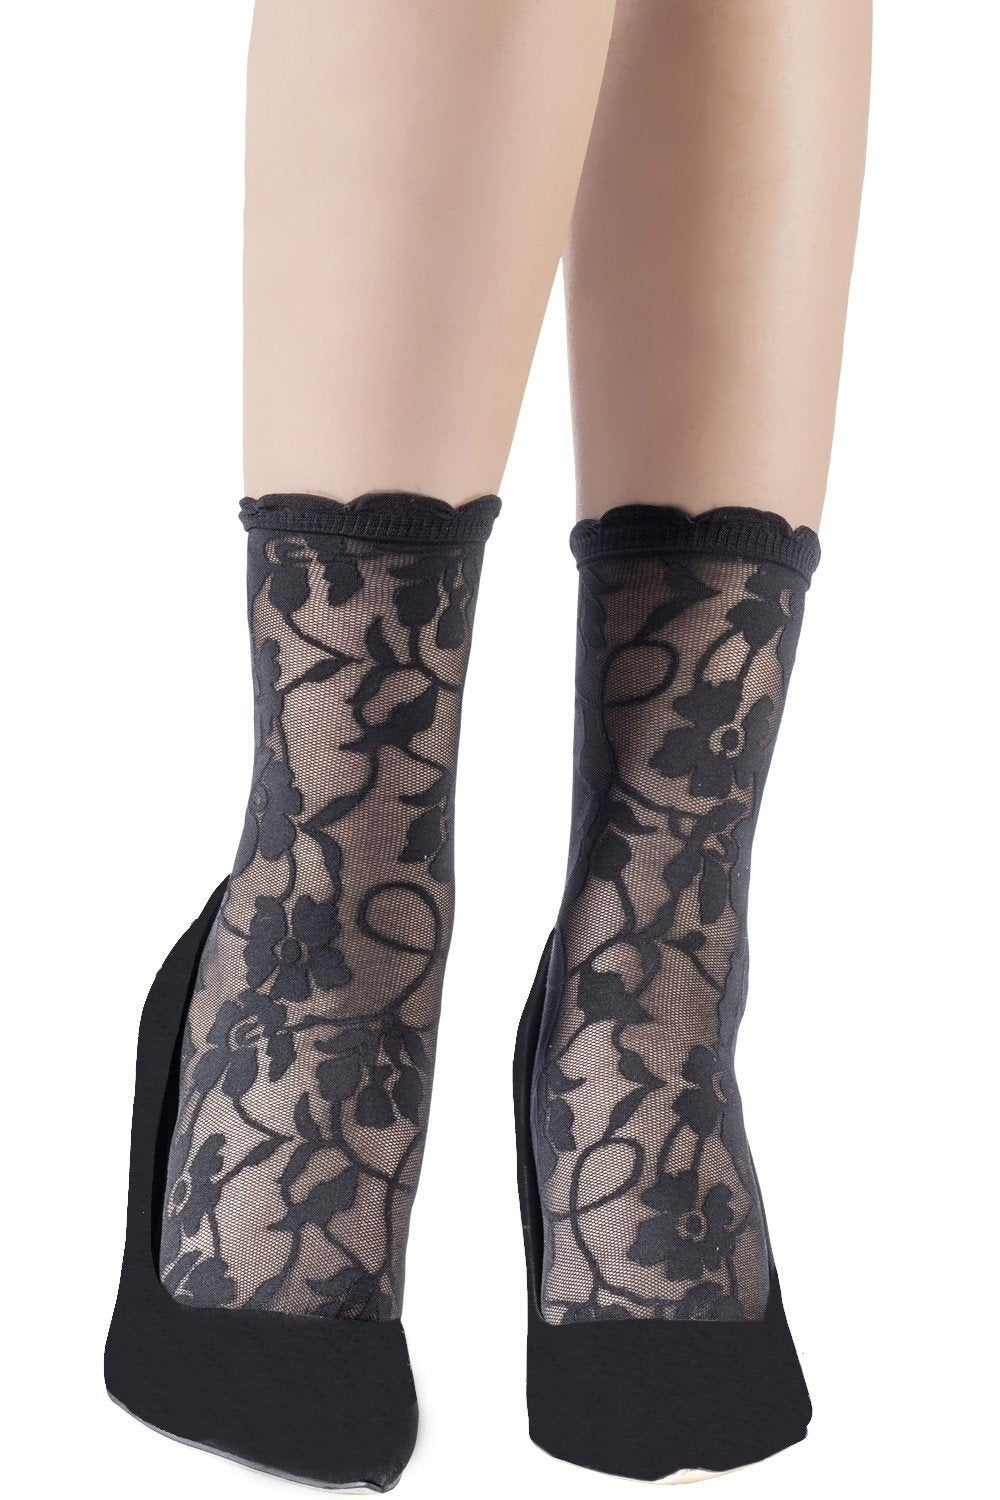 Emilio Cavallini 5C80.5.8 Contemporary Lace Socks - black floral lace fashion ankle socks